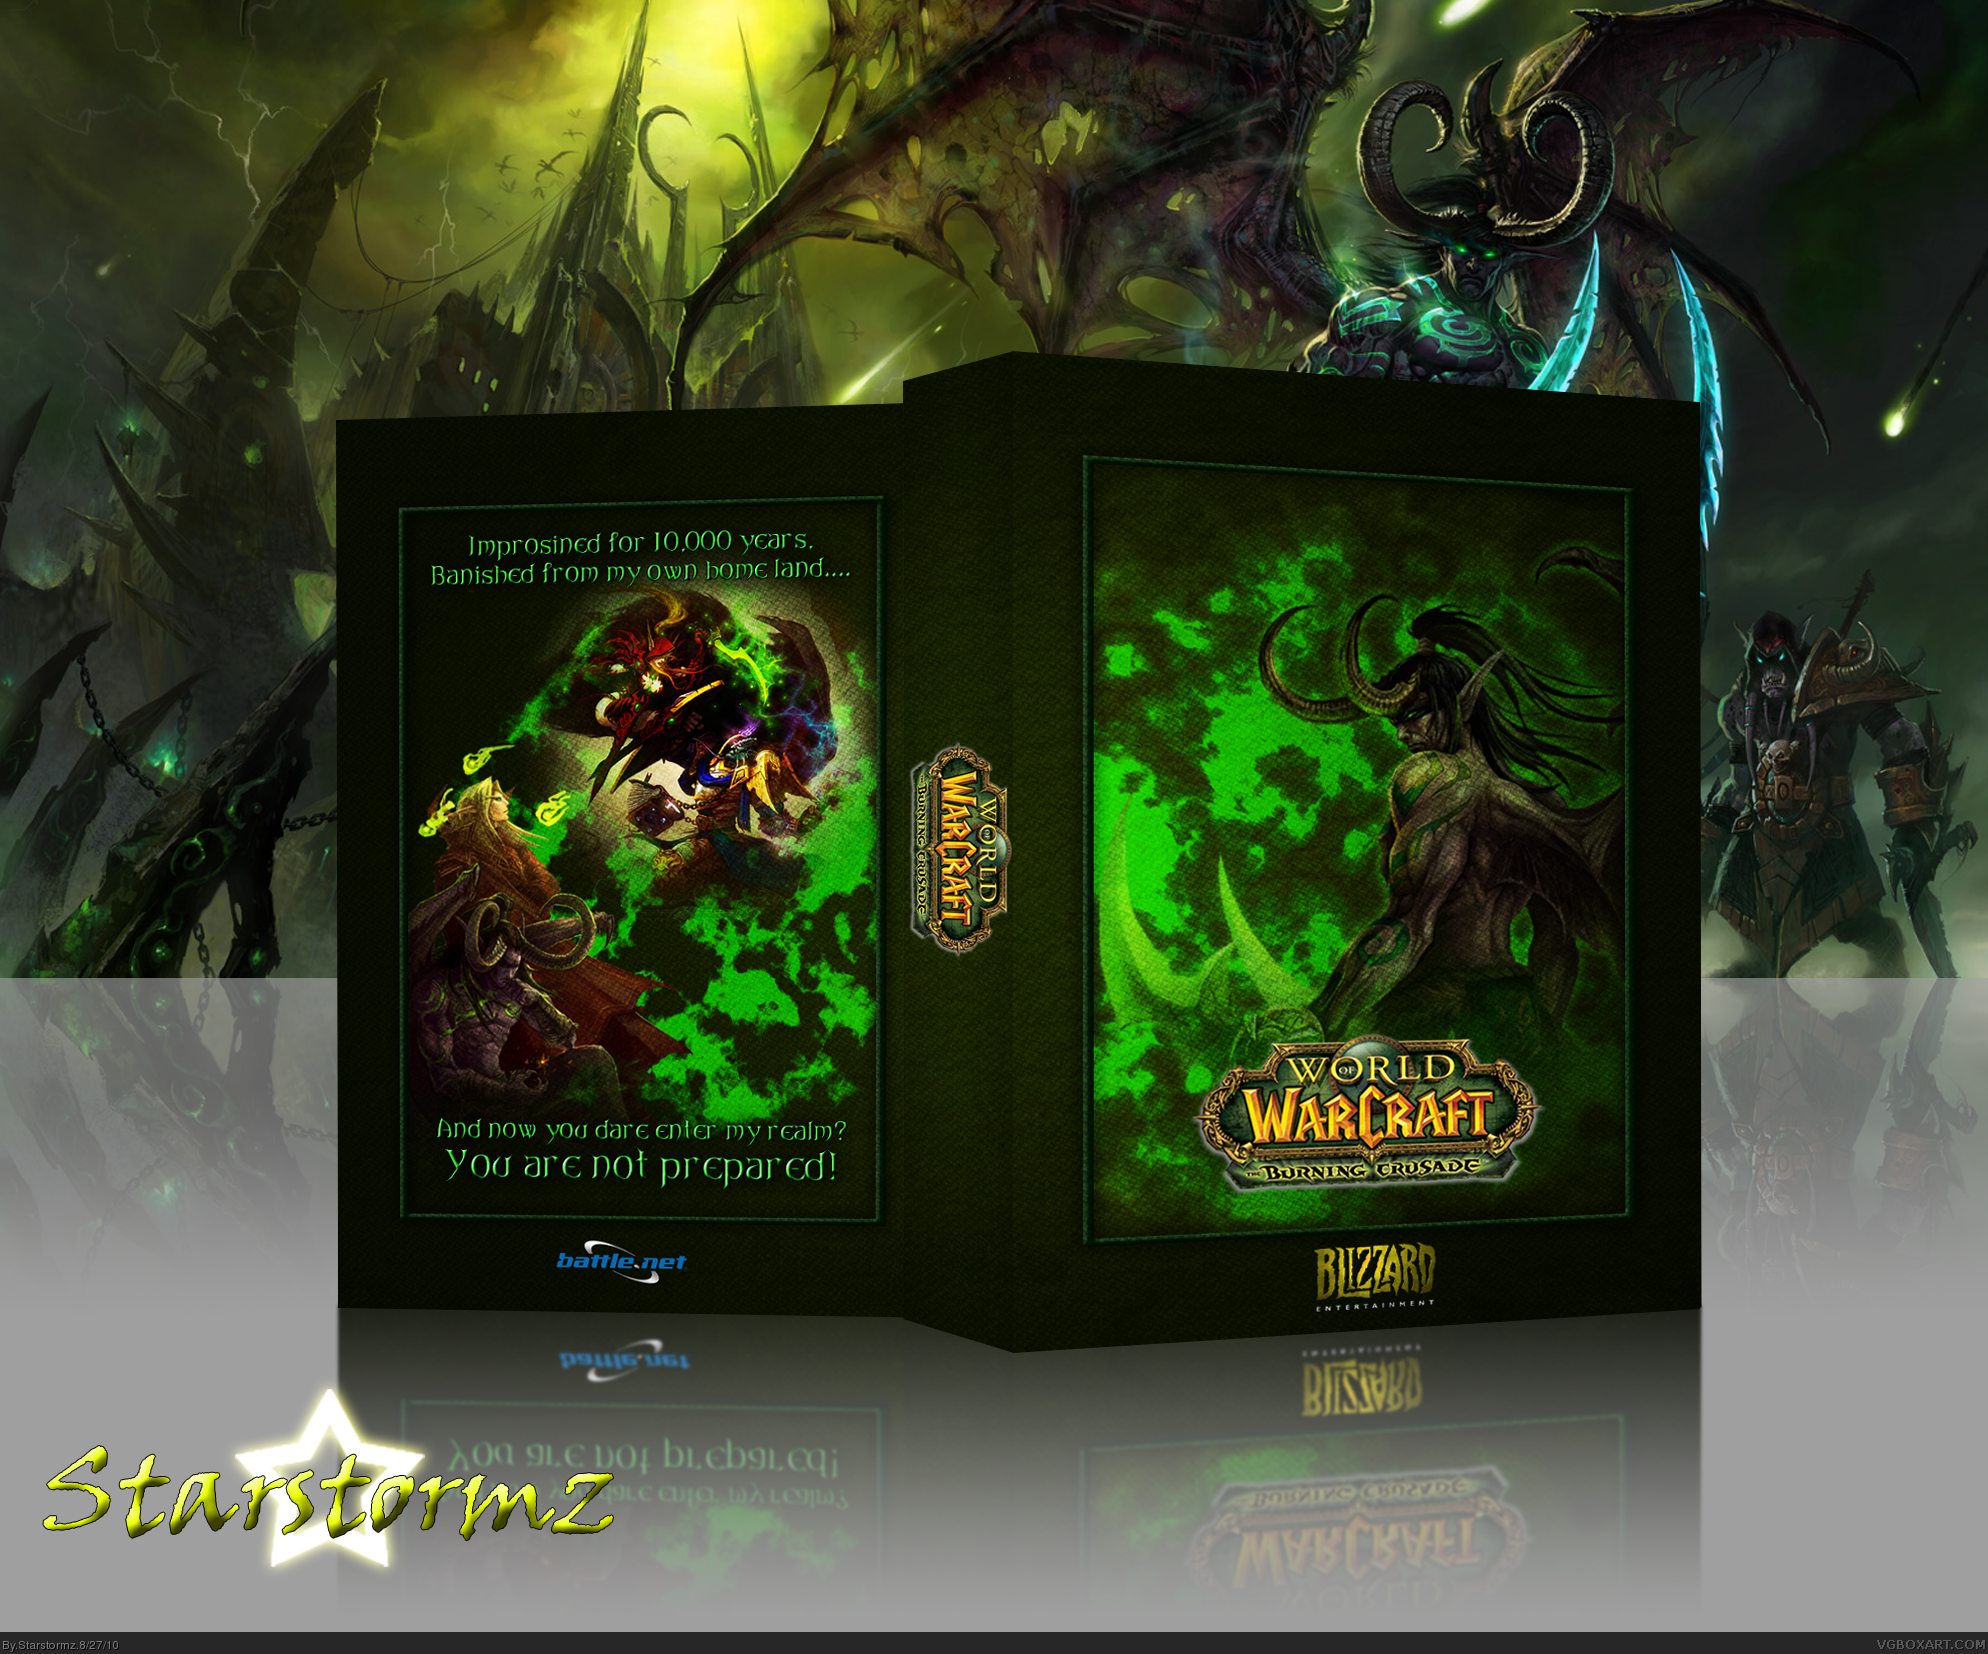 World of Warcraft: The Burning Crusade box cover